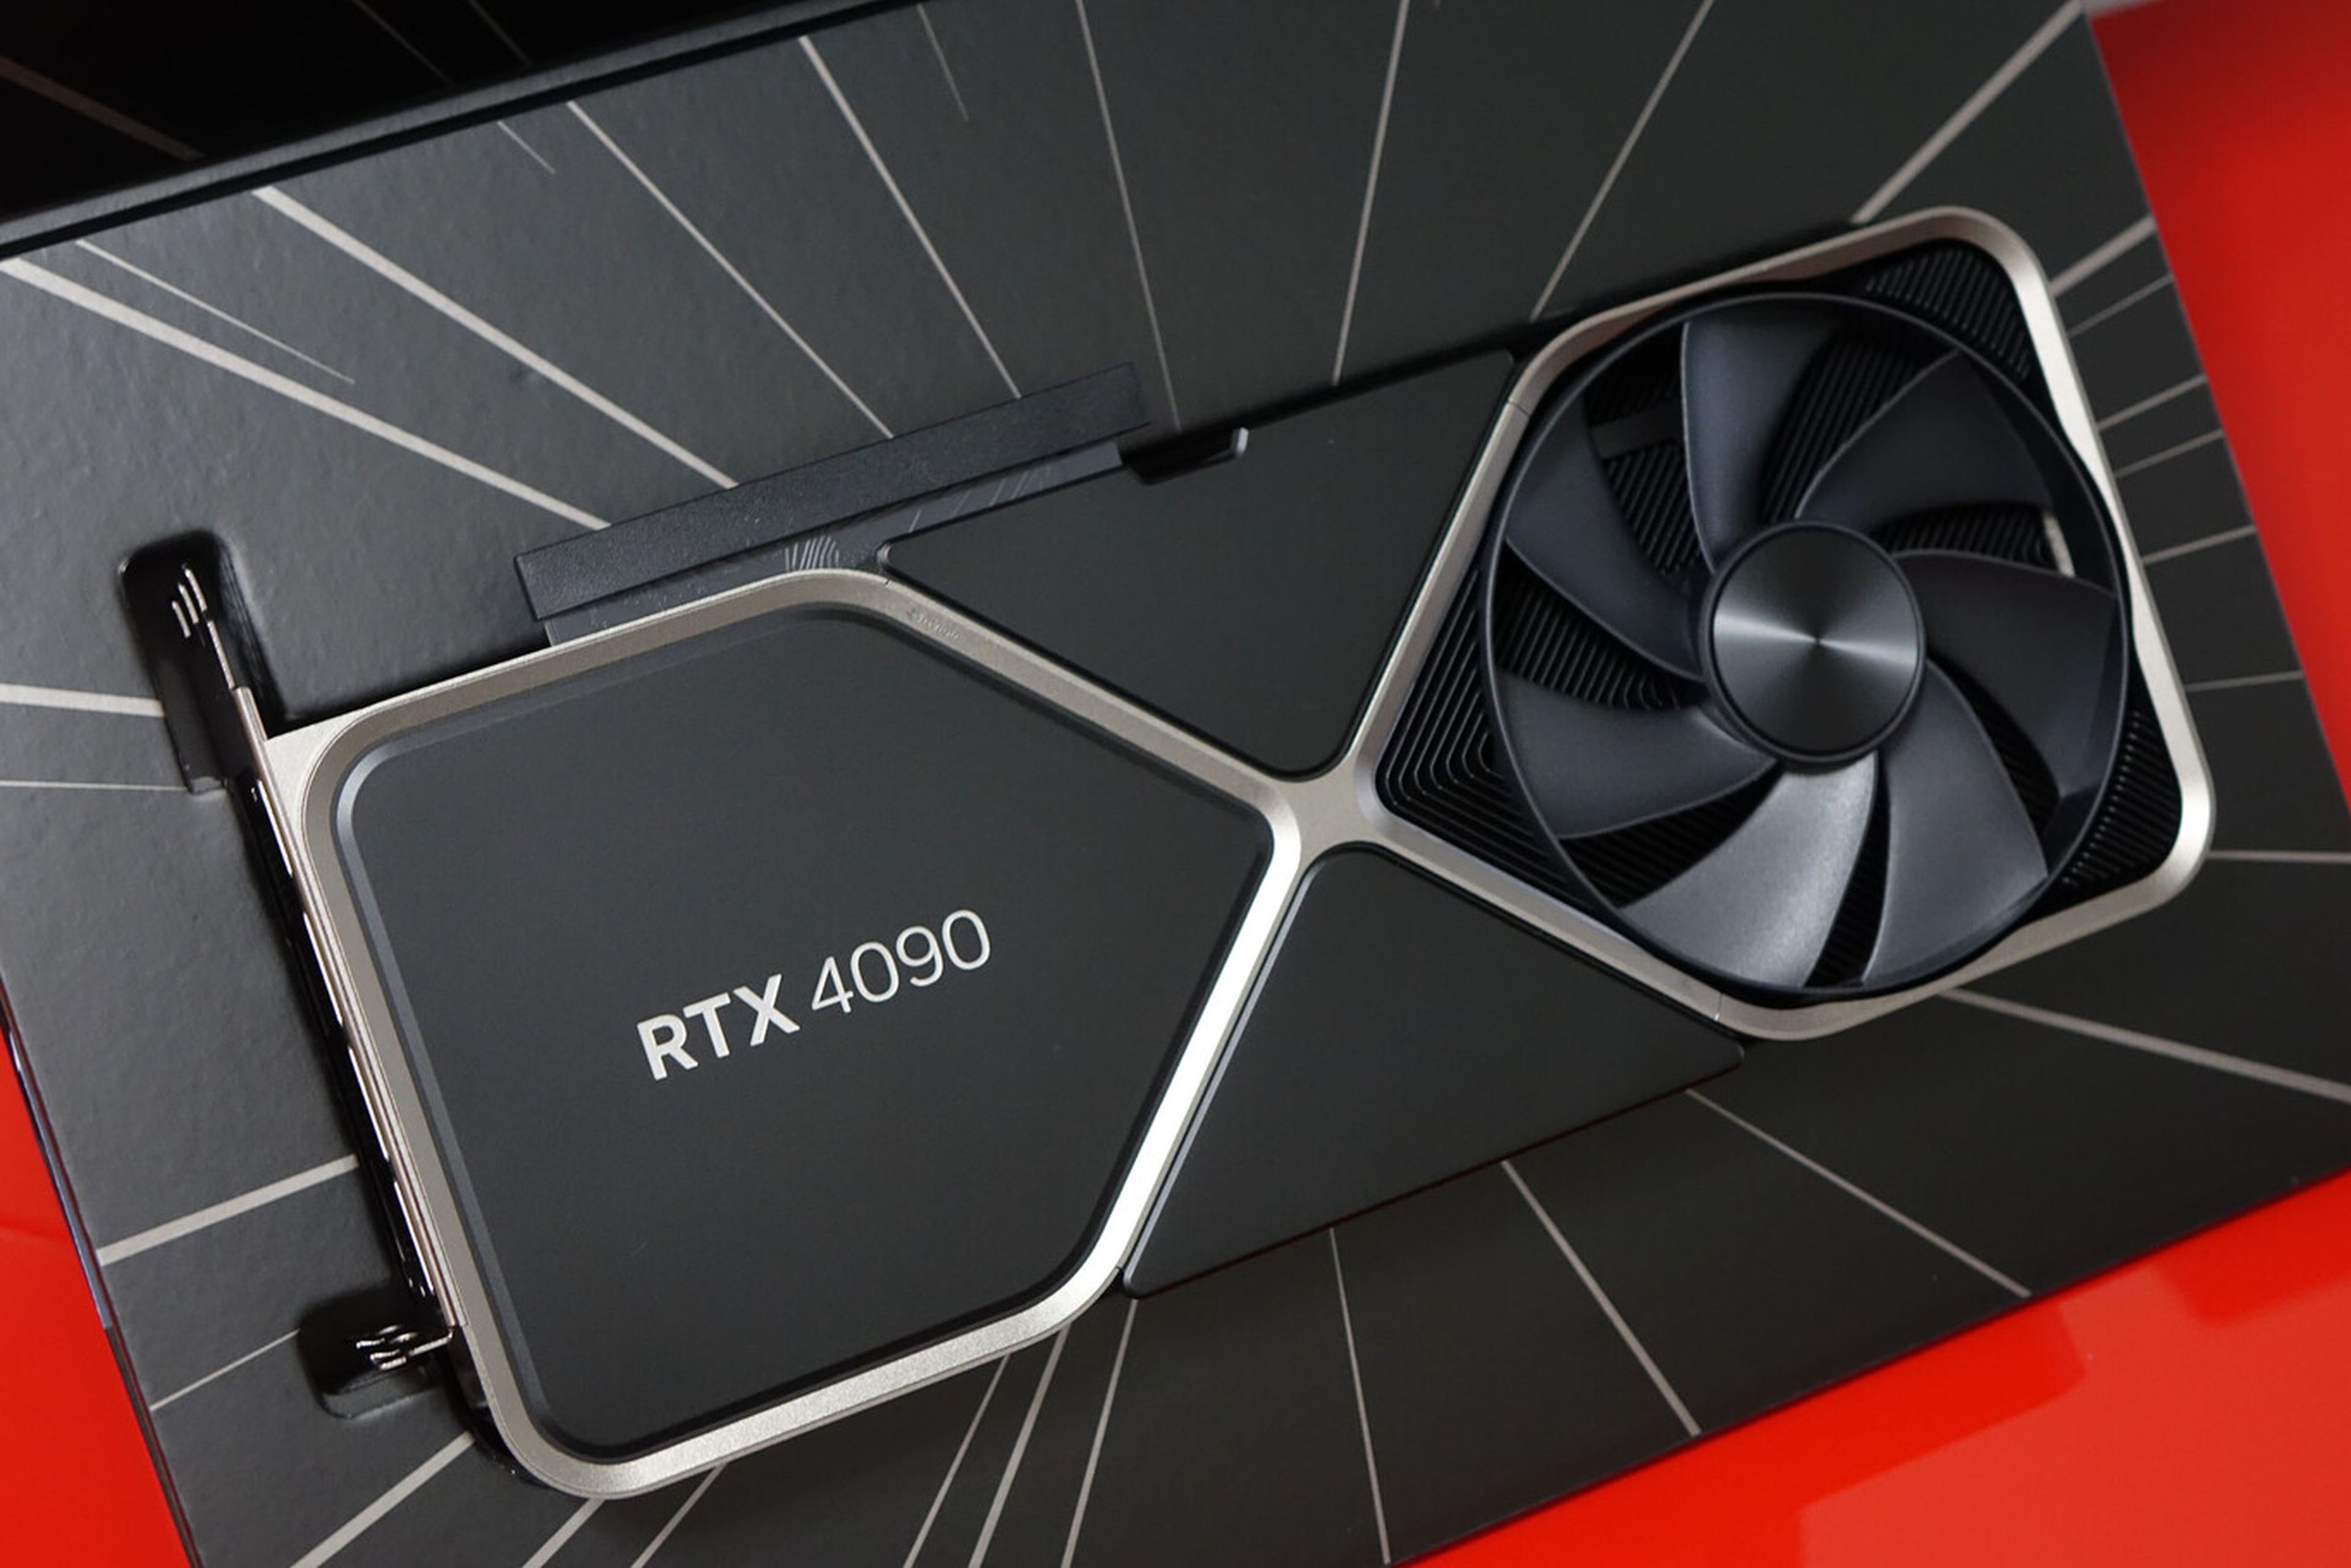 NVIDIA GeForce RTX 4090